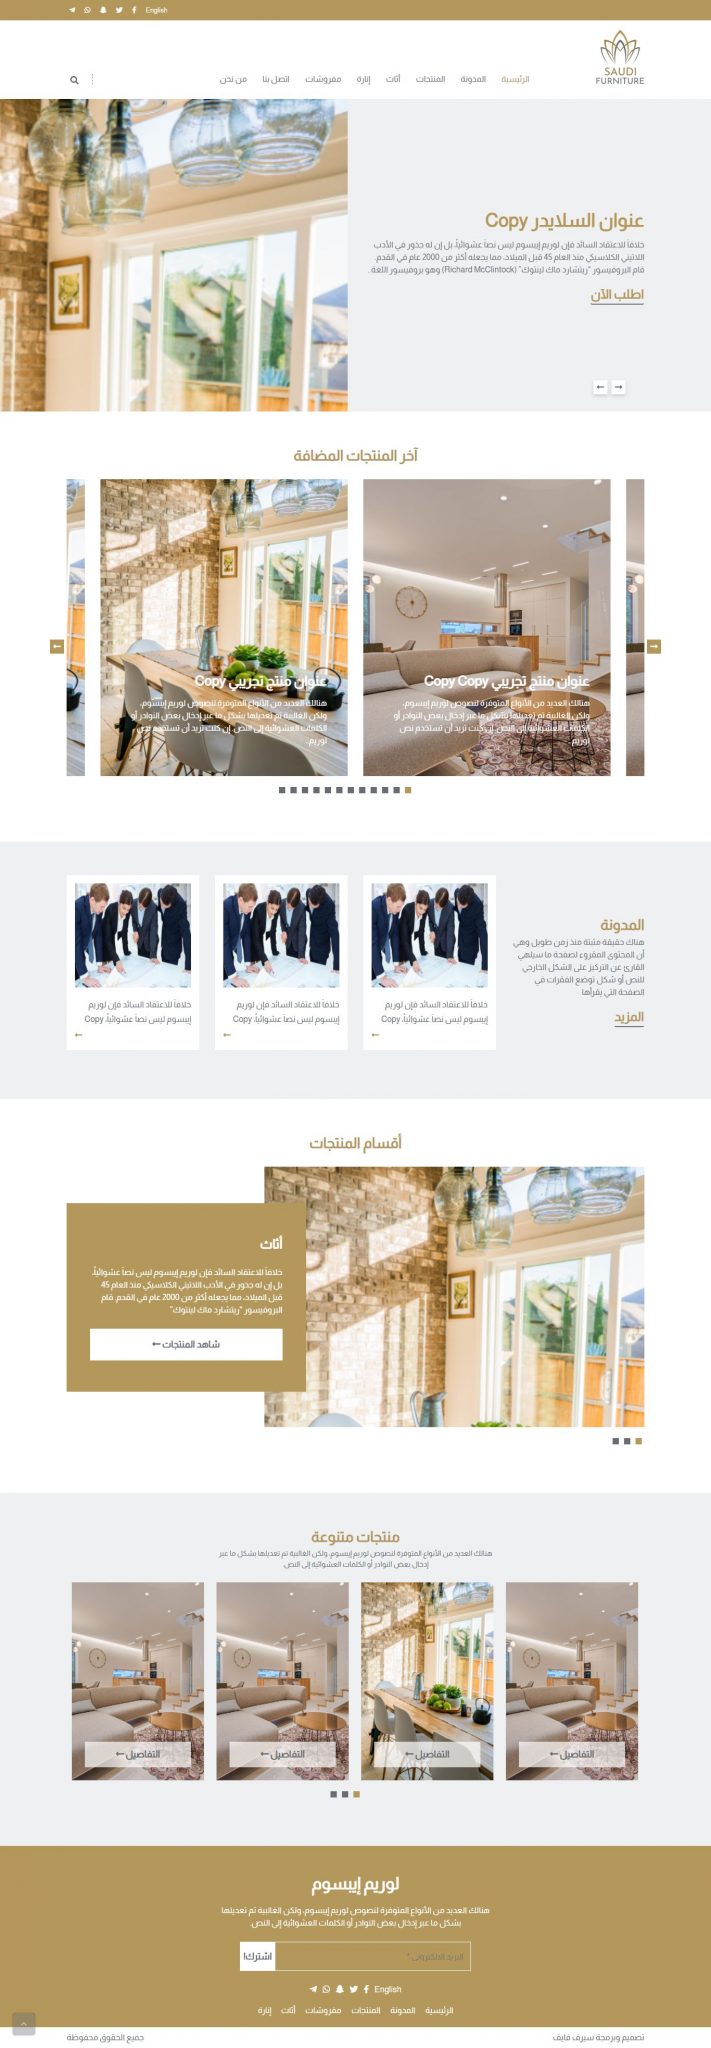 Saudi furniture website design